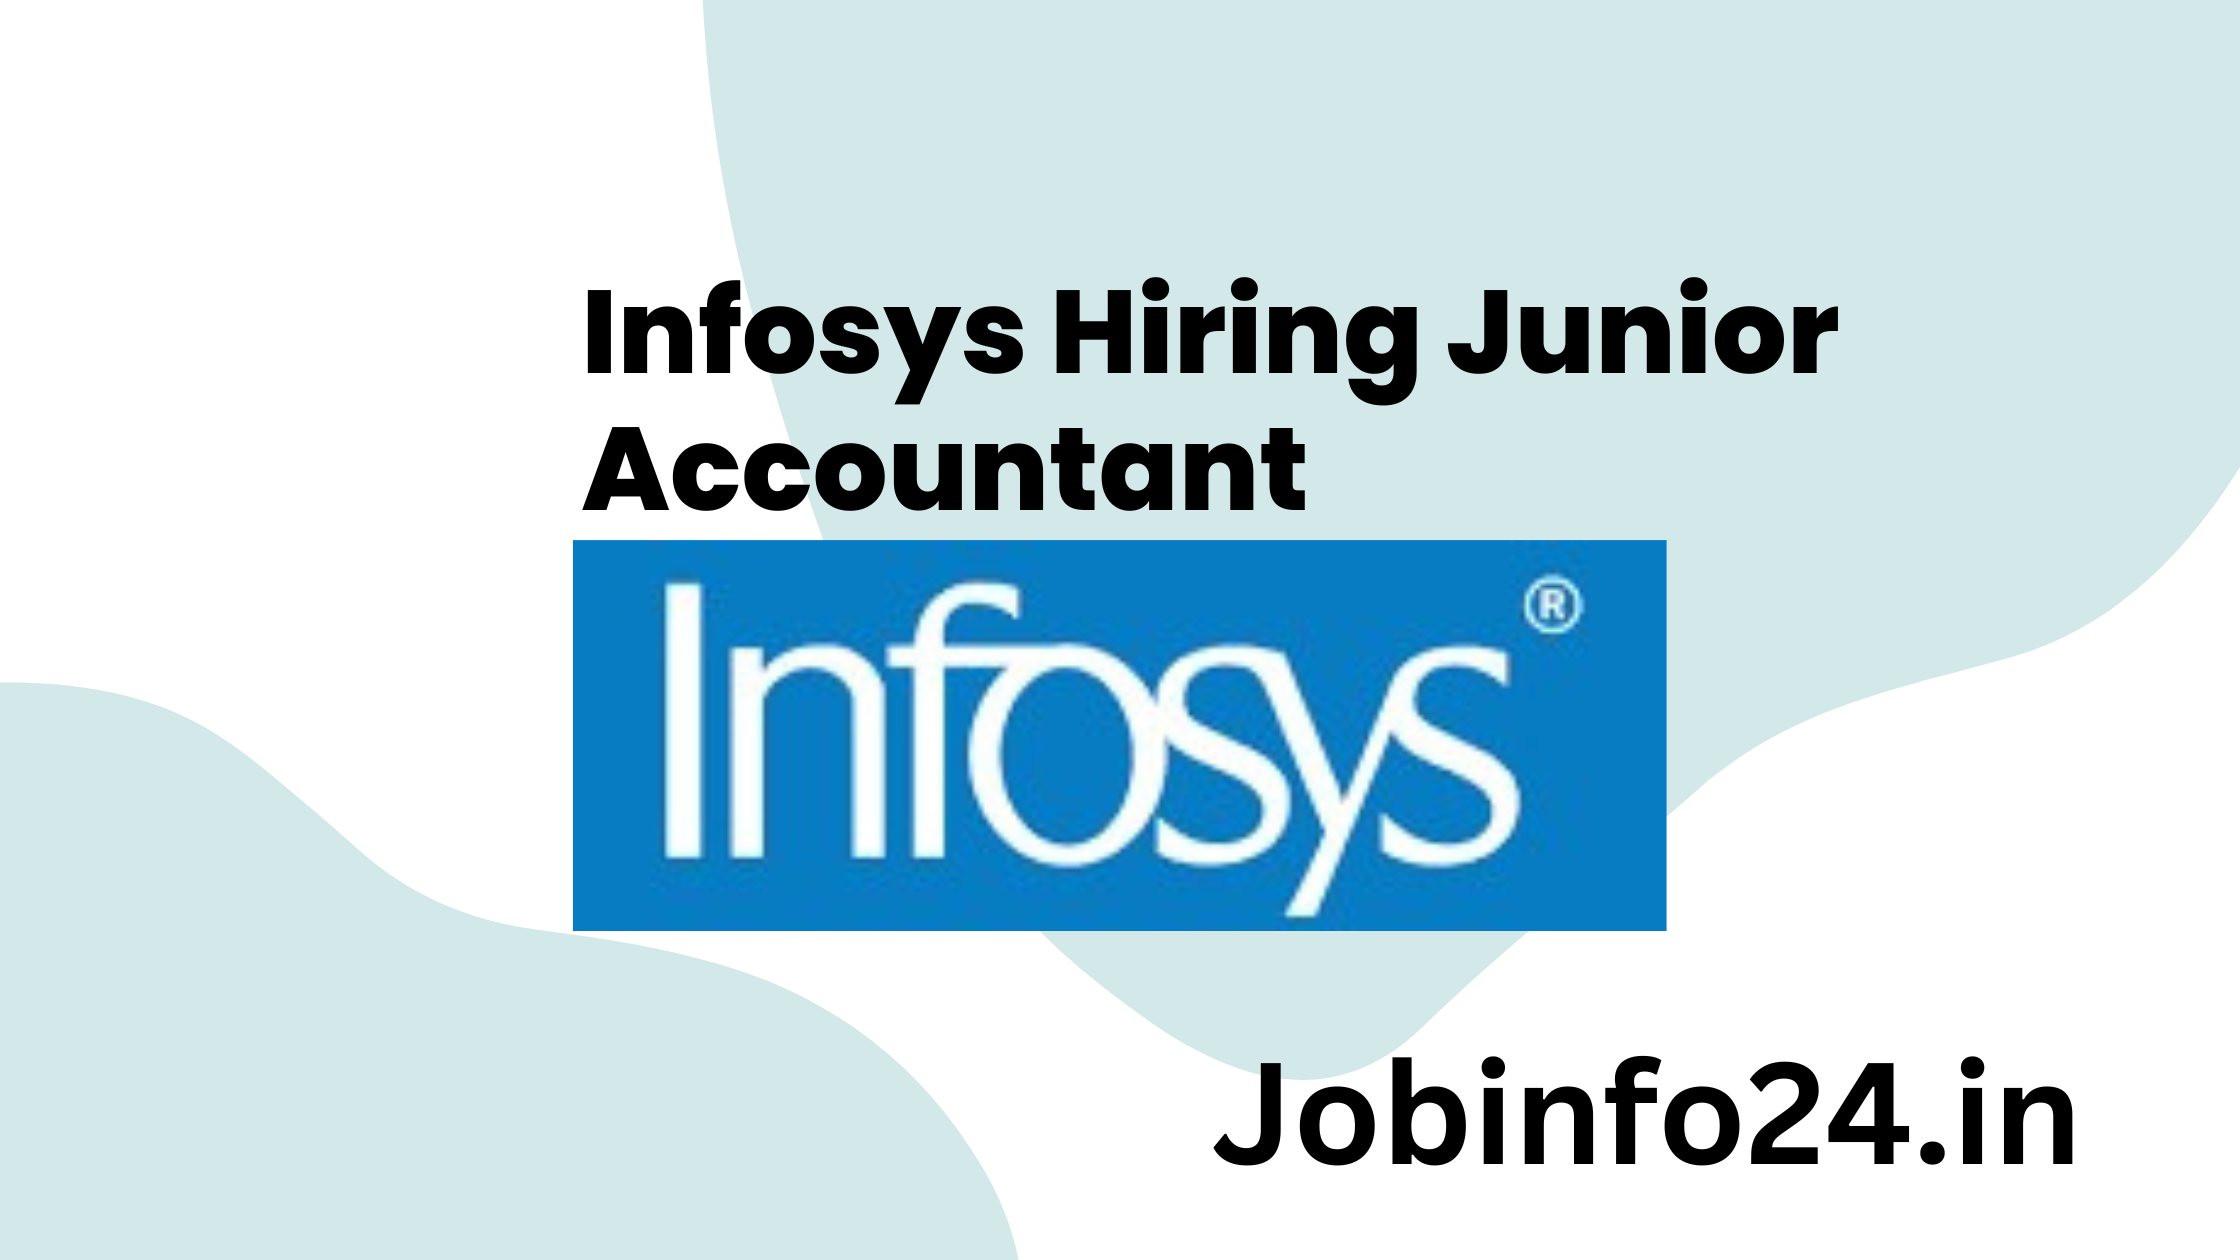 Infosys Hiring Junior Accountant